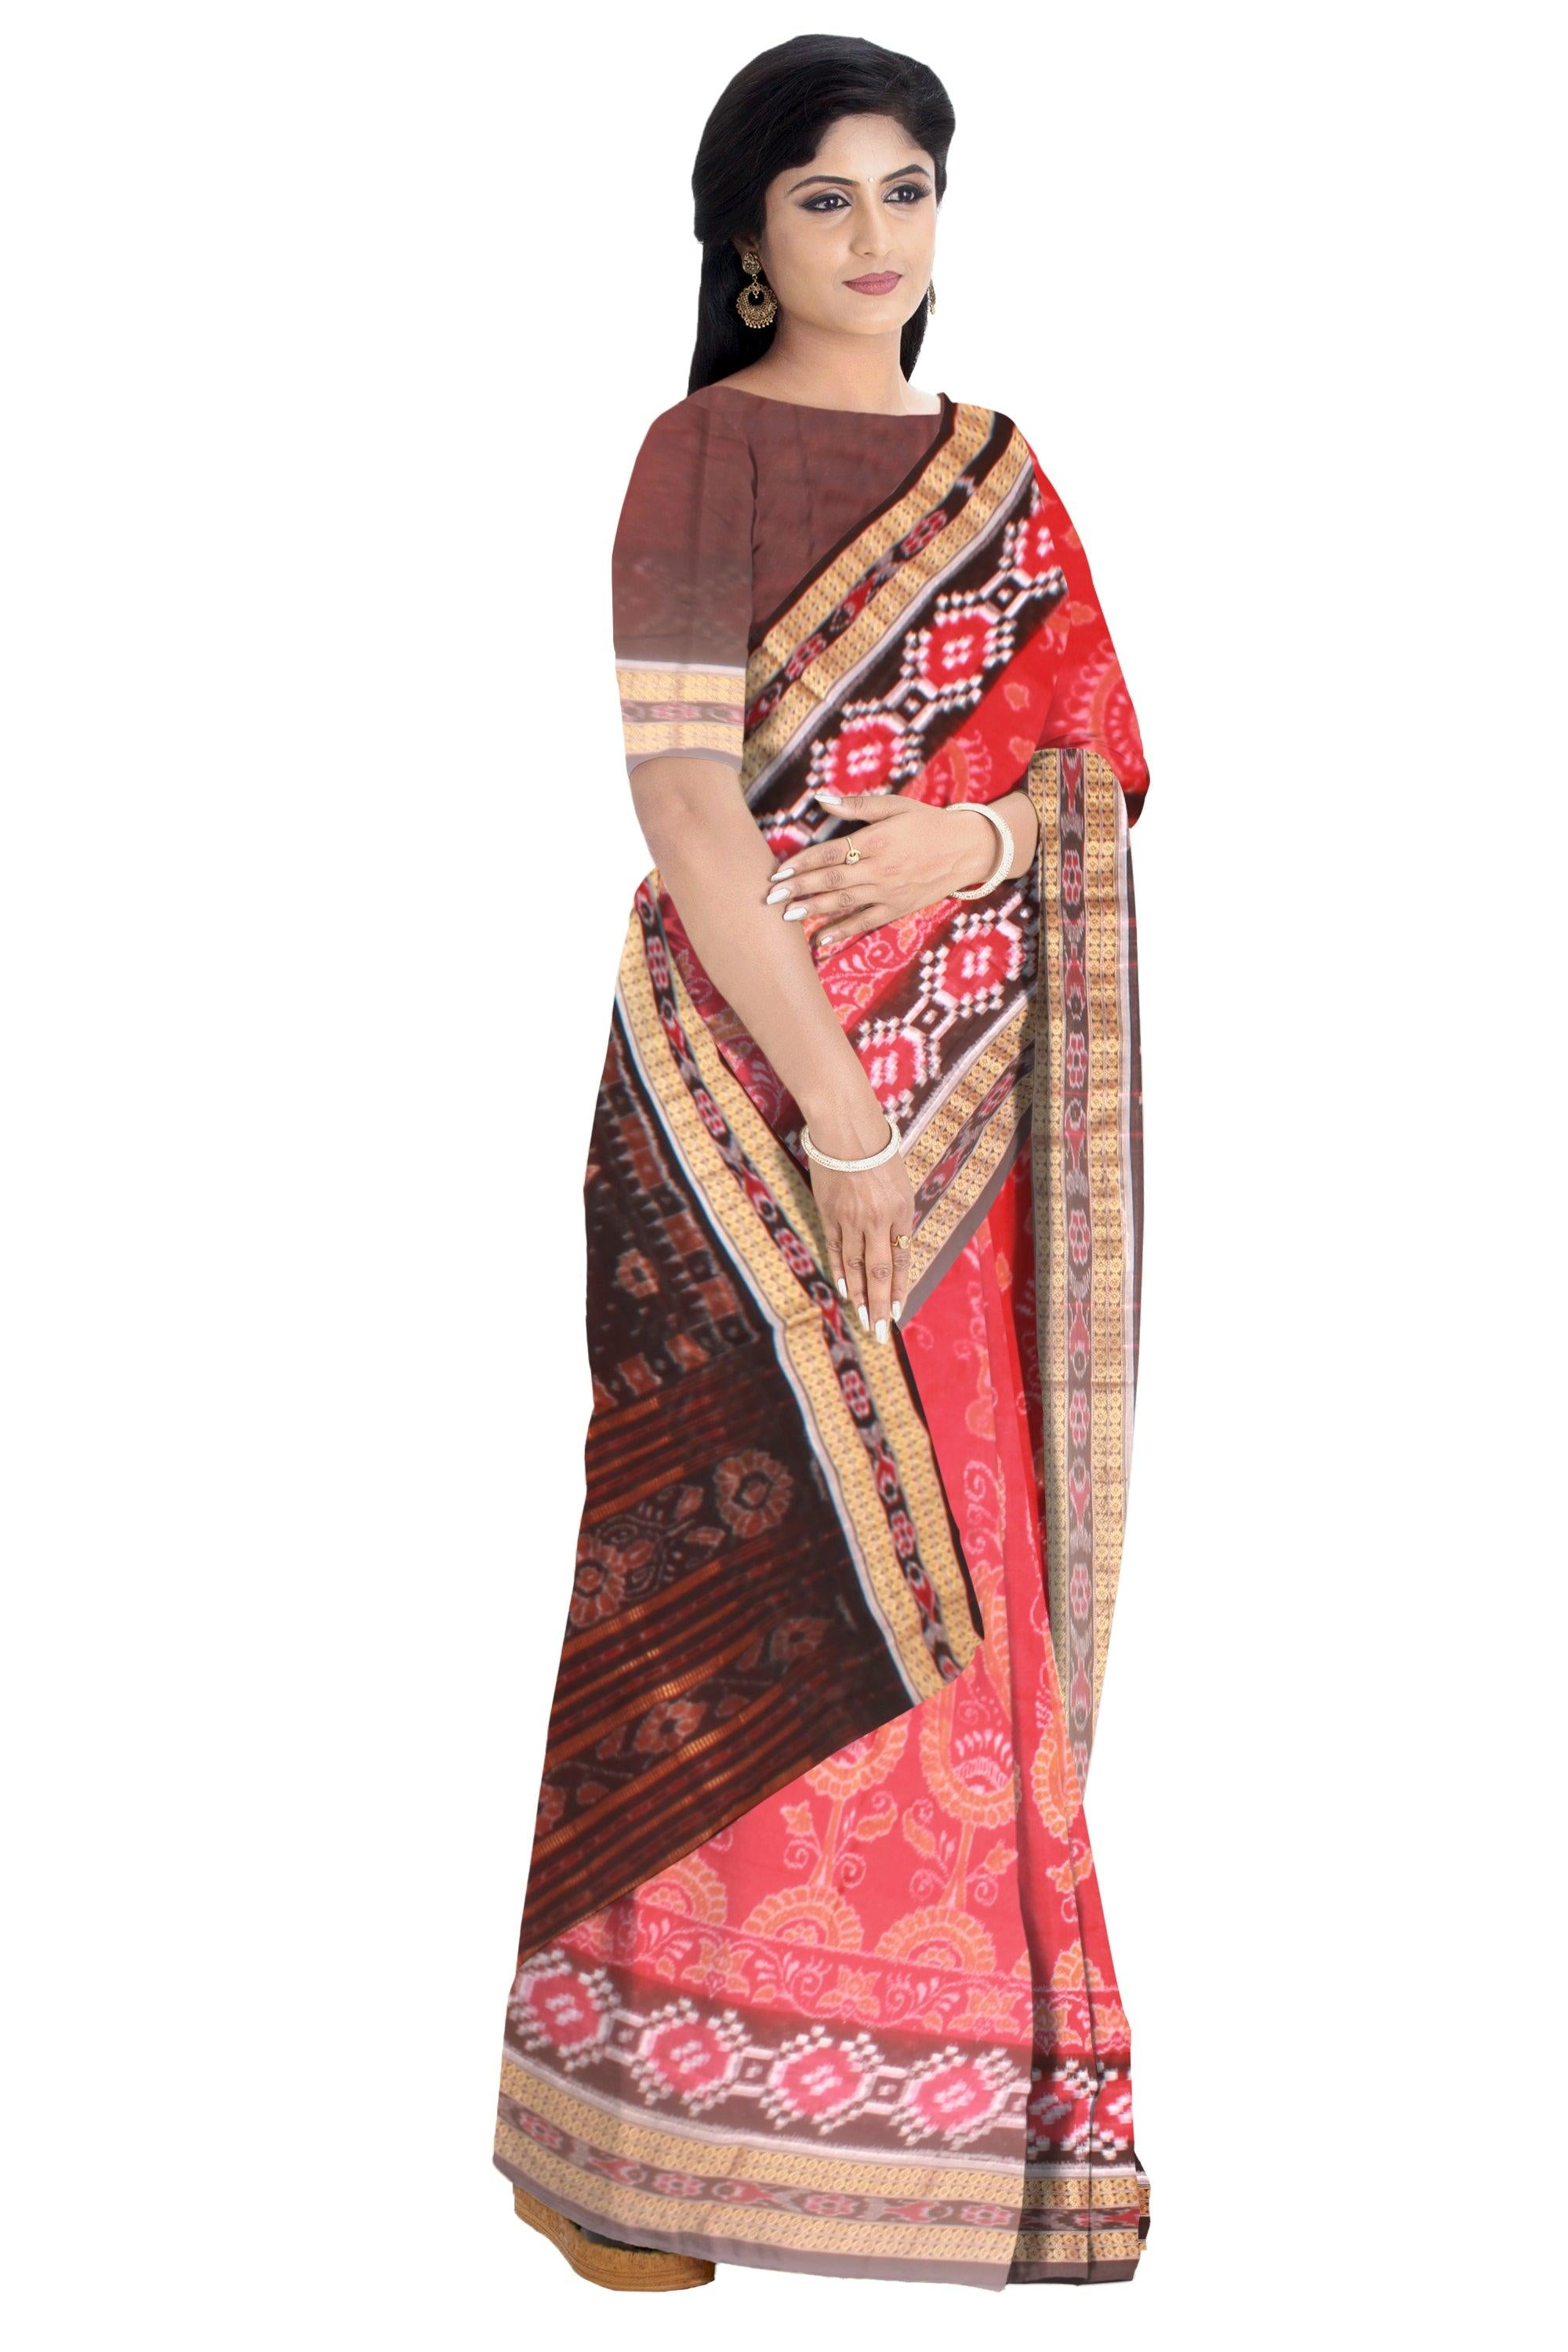 A Samblpuri cotton  saree in Red and Black  colour border with blouse piece. - Koshali Arts & Crafts Enterprise